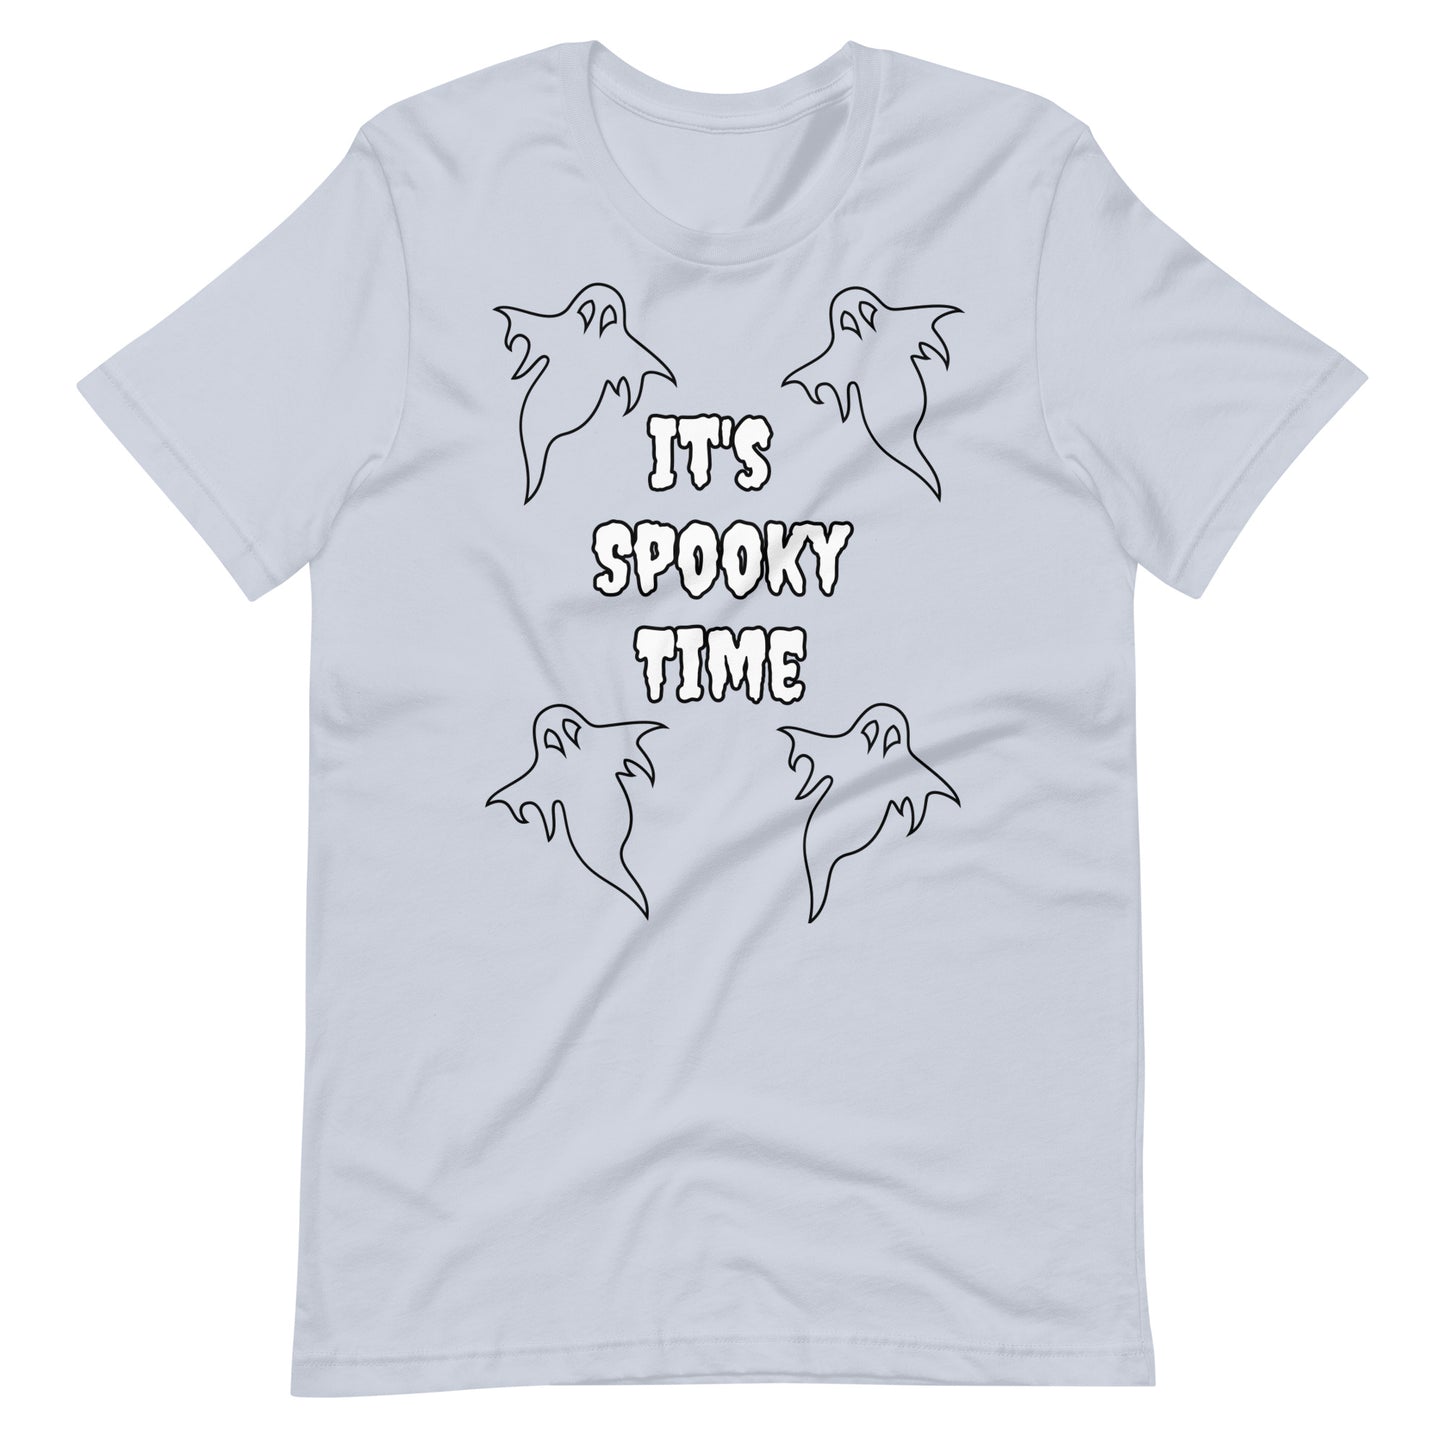 Halloween “It's Spooky Time” Shirt